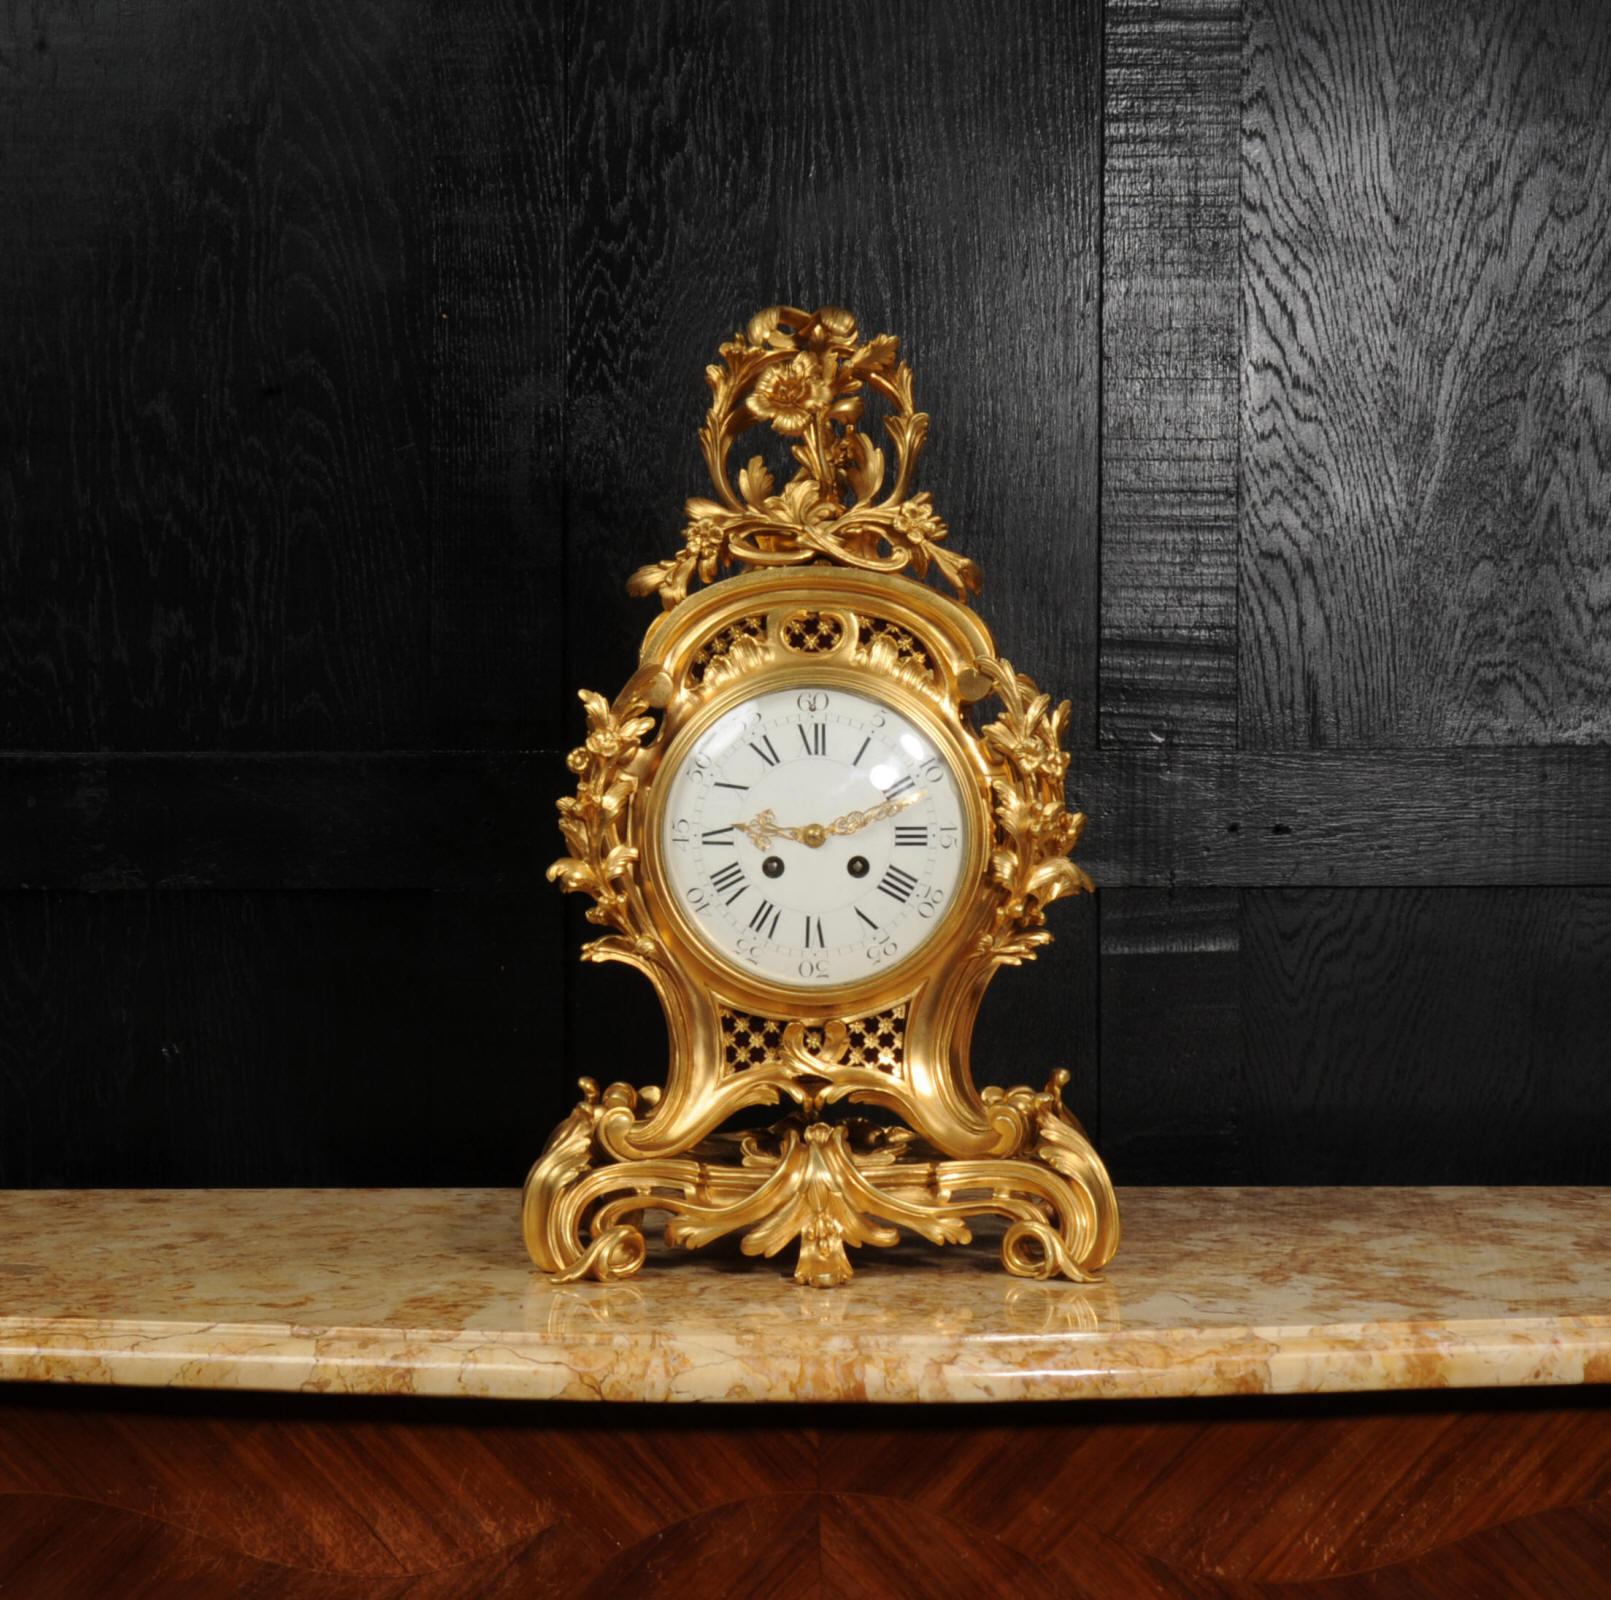 Rococo Belle et grande horloge rococo française ancienne en bronze doré